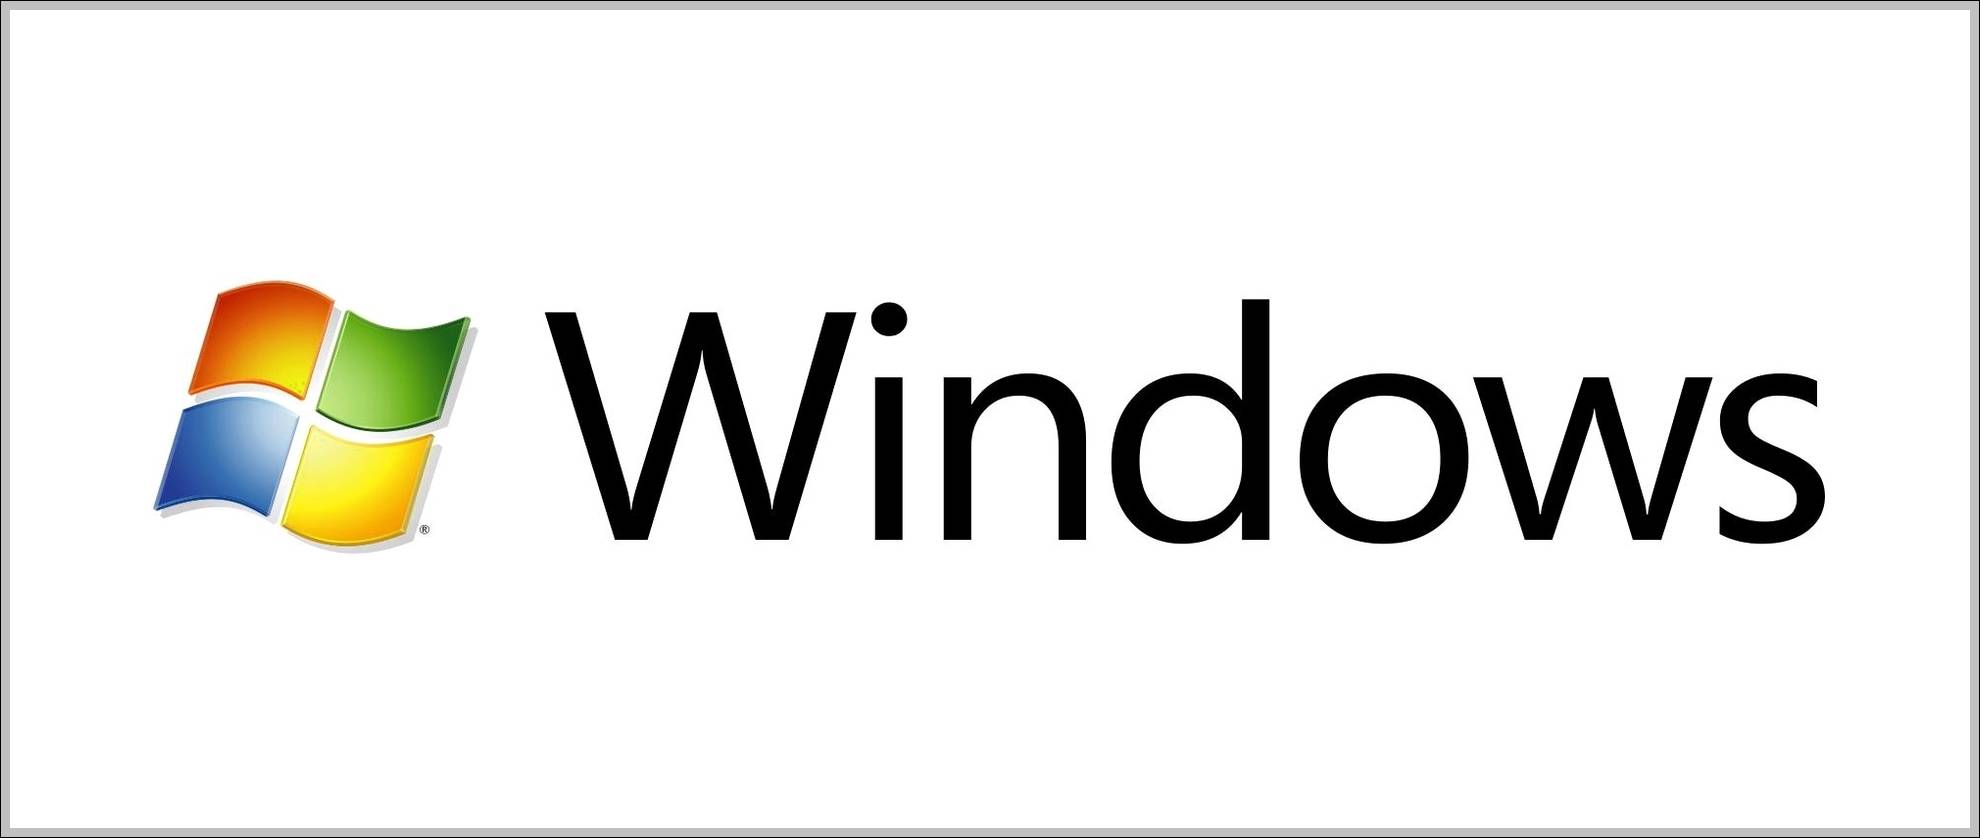 All Windows Logo - Windows logo 7 | Logo Sign - Logos, Signs, Symbols, Trademarks of ...